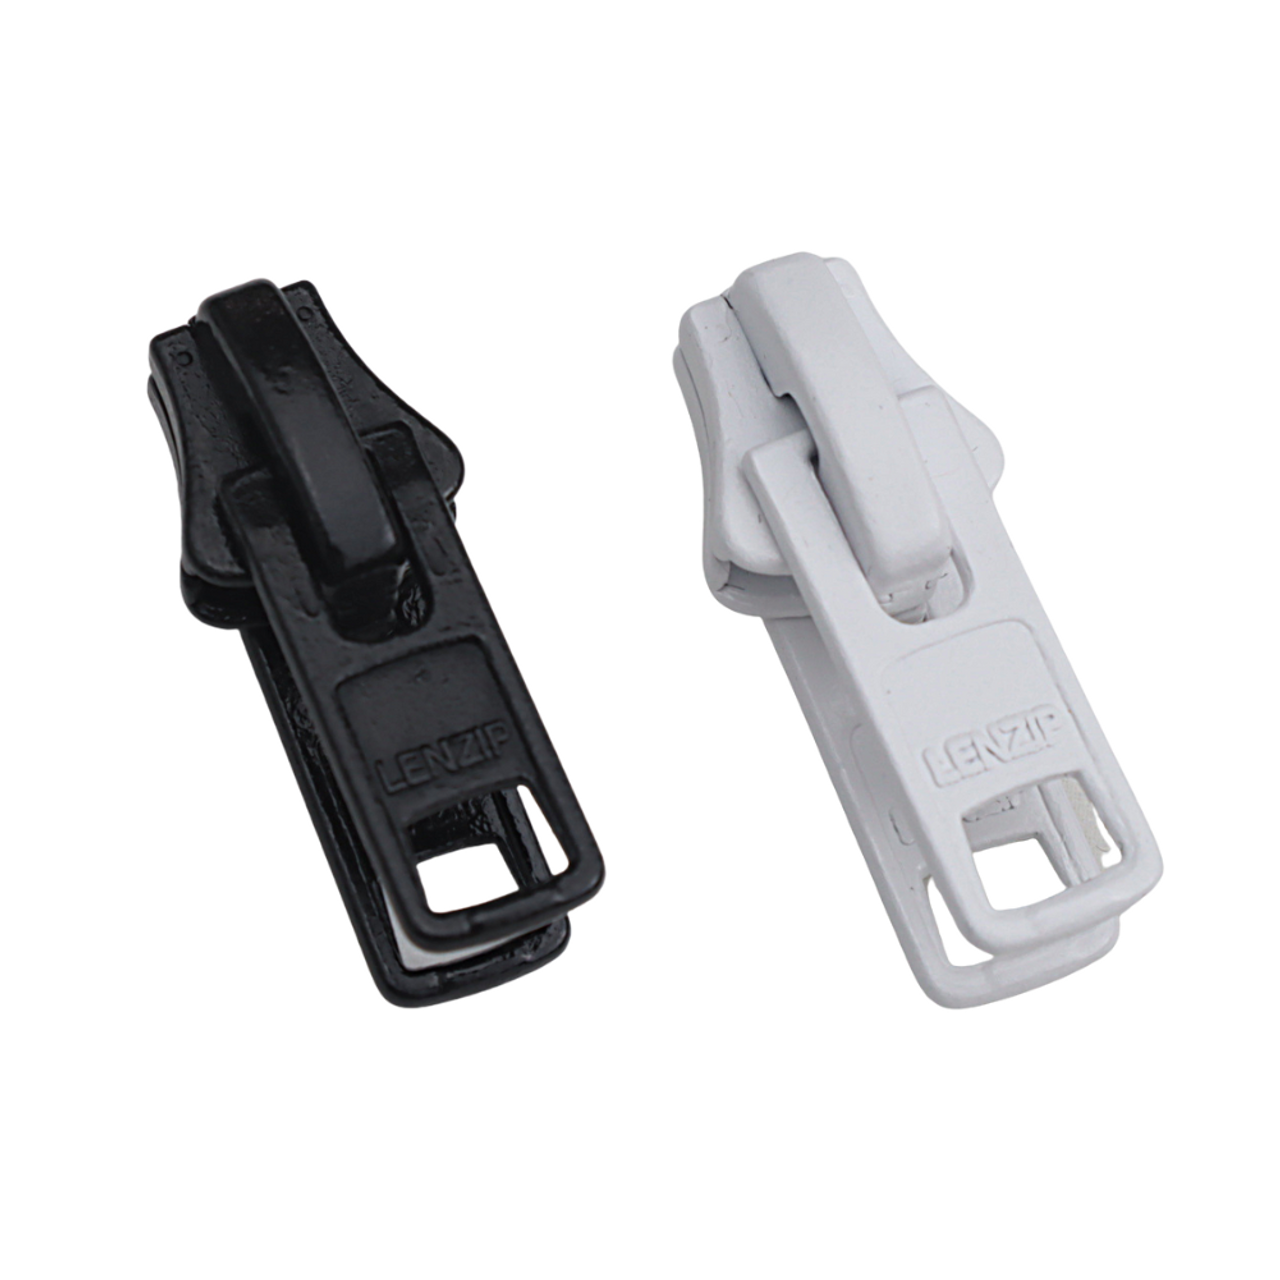 Zipper Sliders YKK or LENZIP - Metal Vislon #10 - Locking- Double Pull